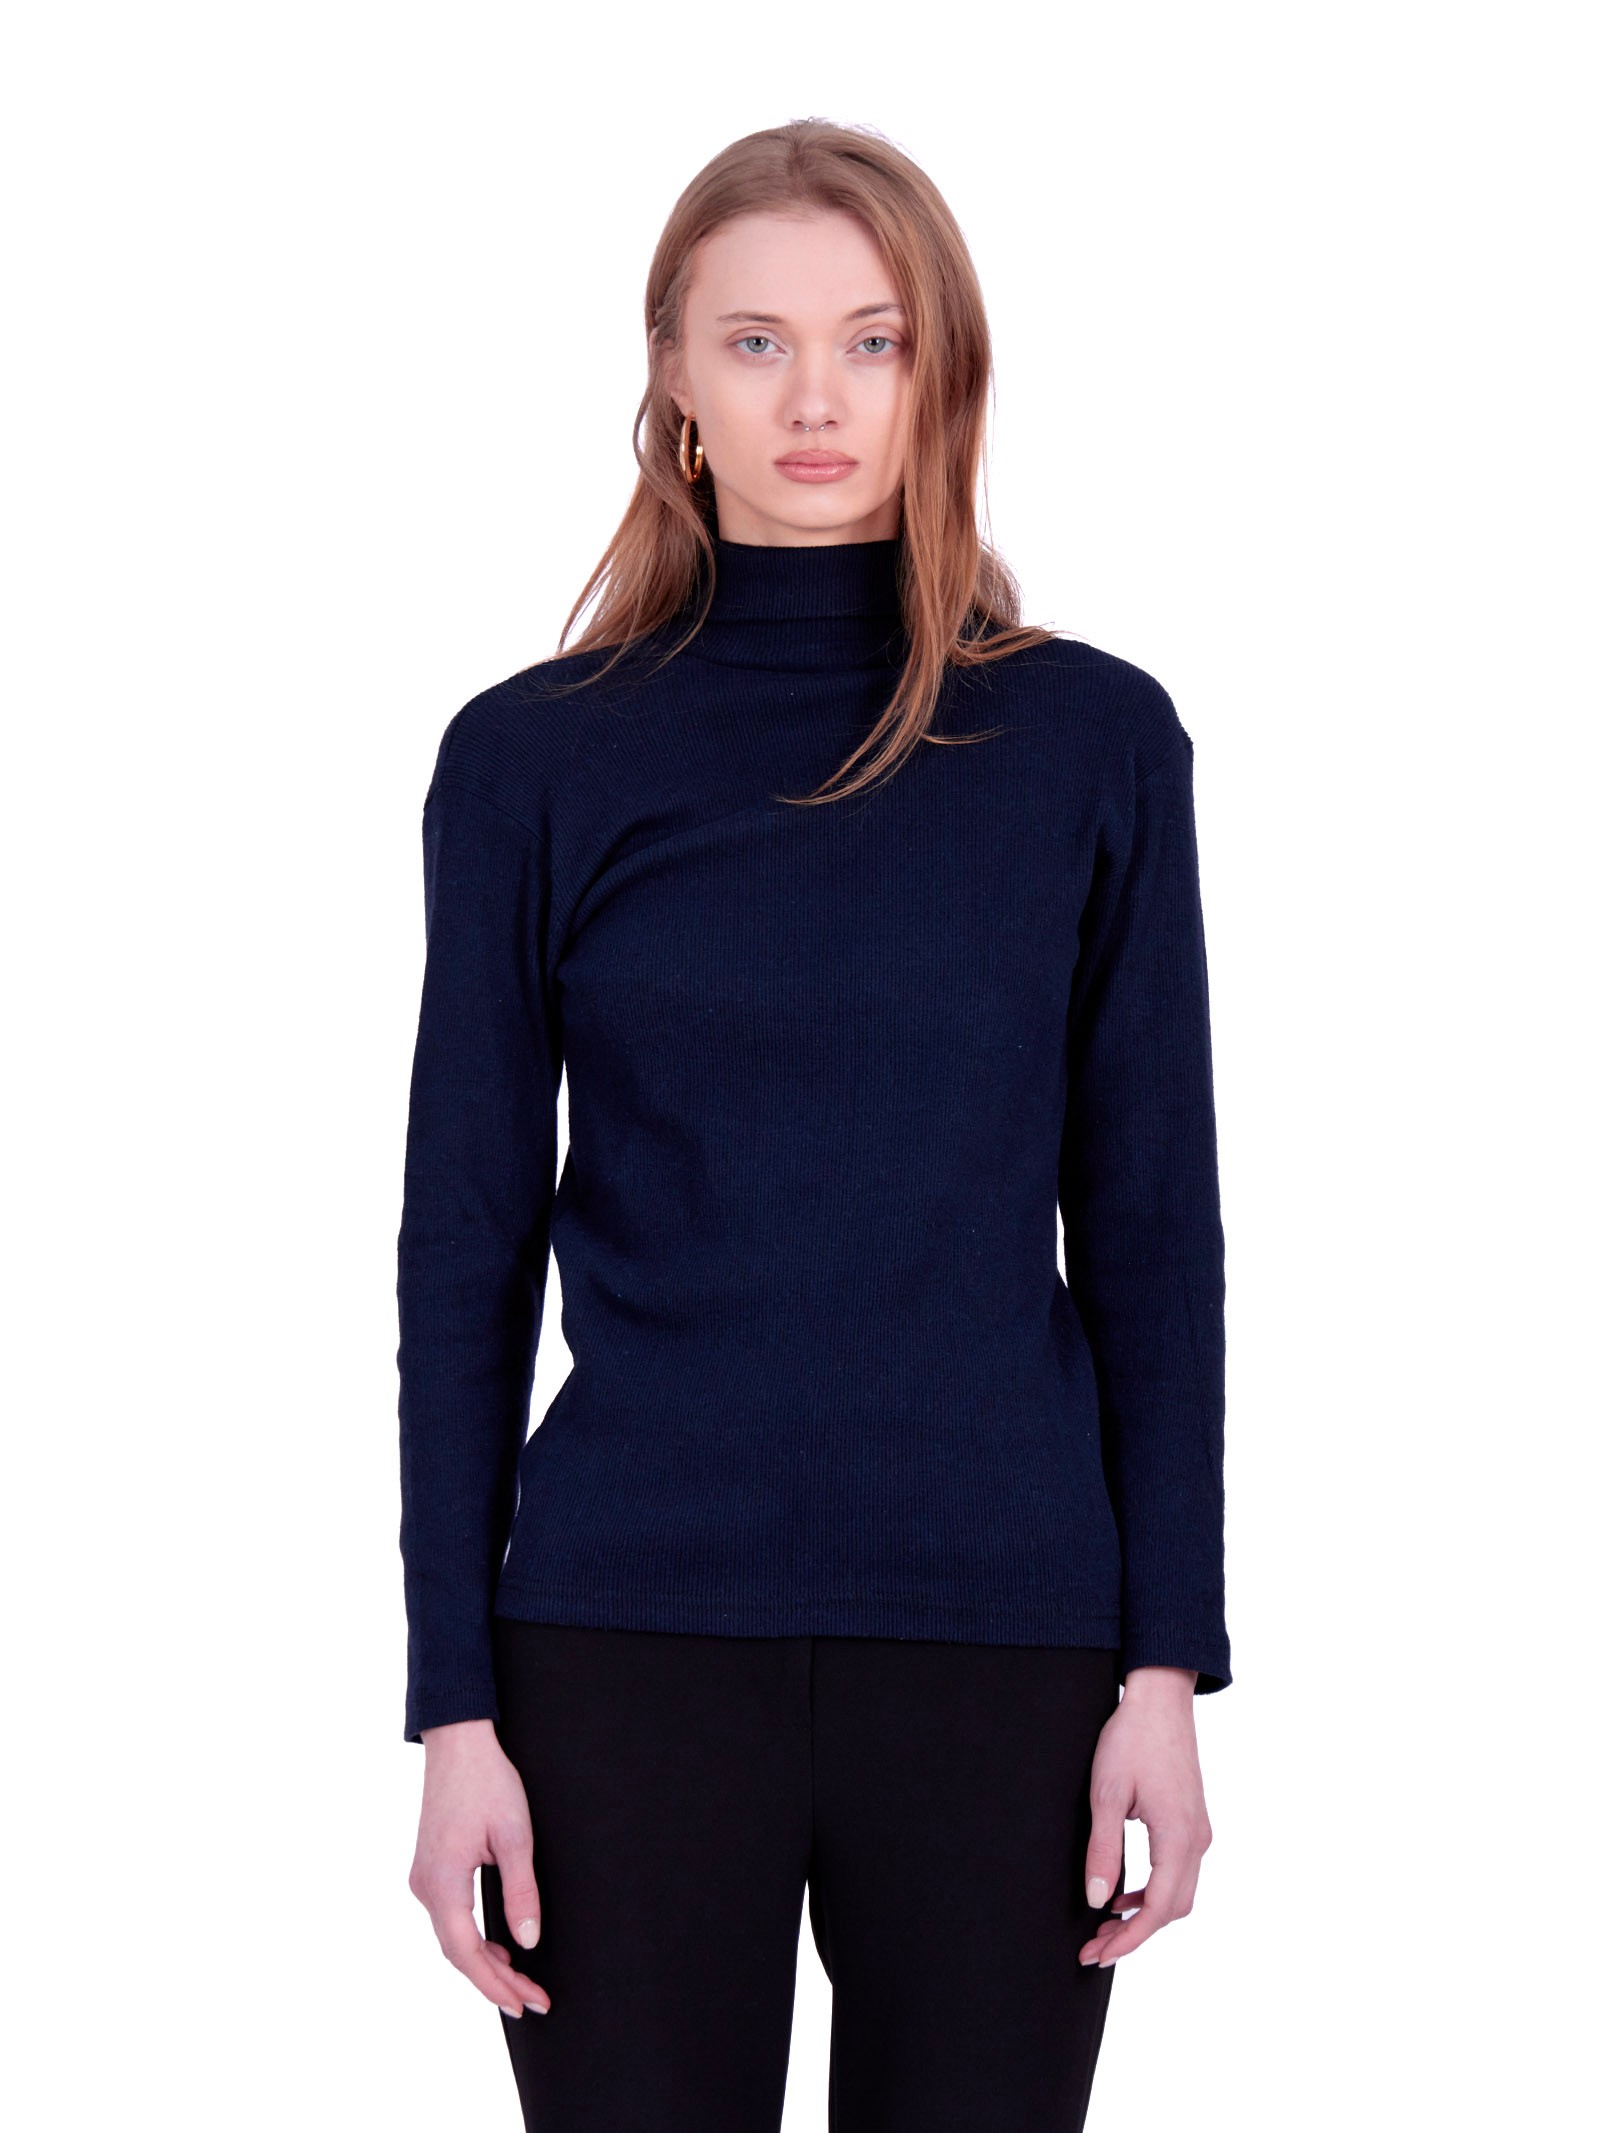 Unisex turtleneck Sweater Black